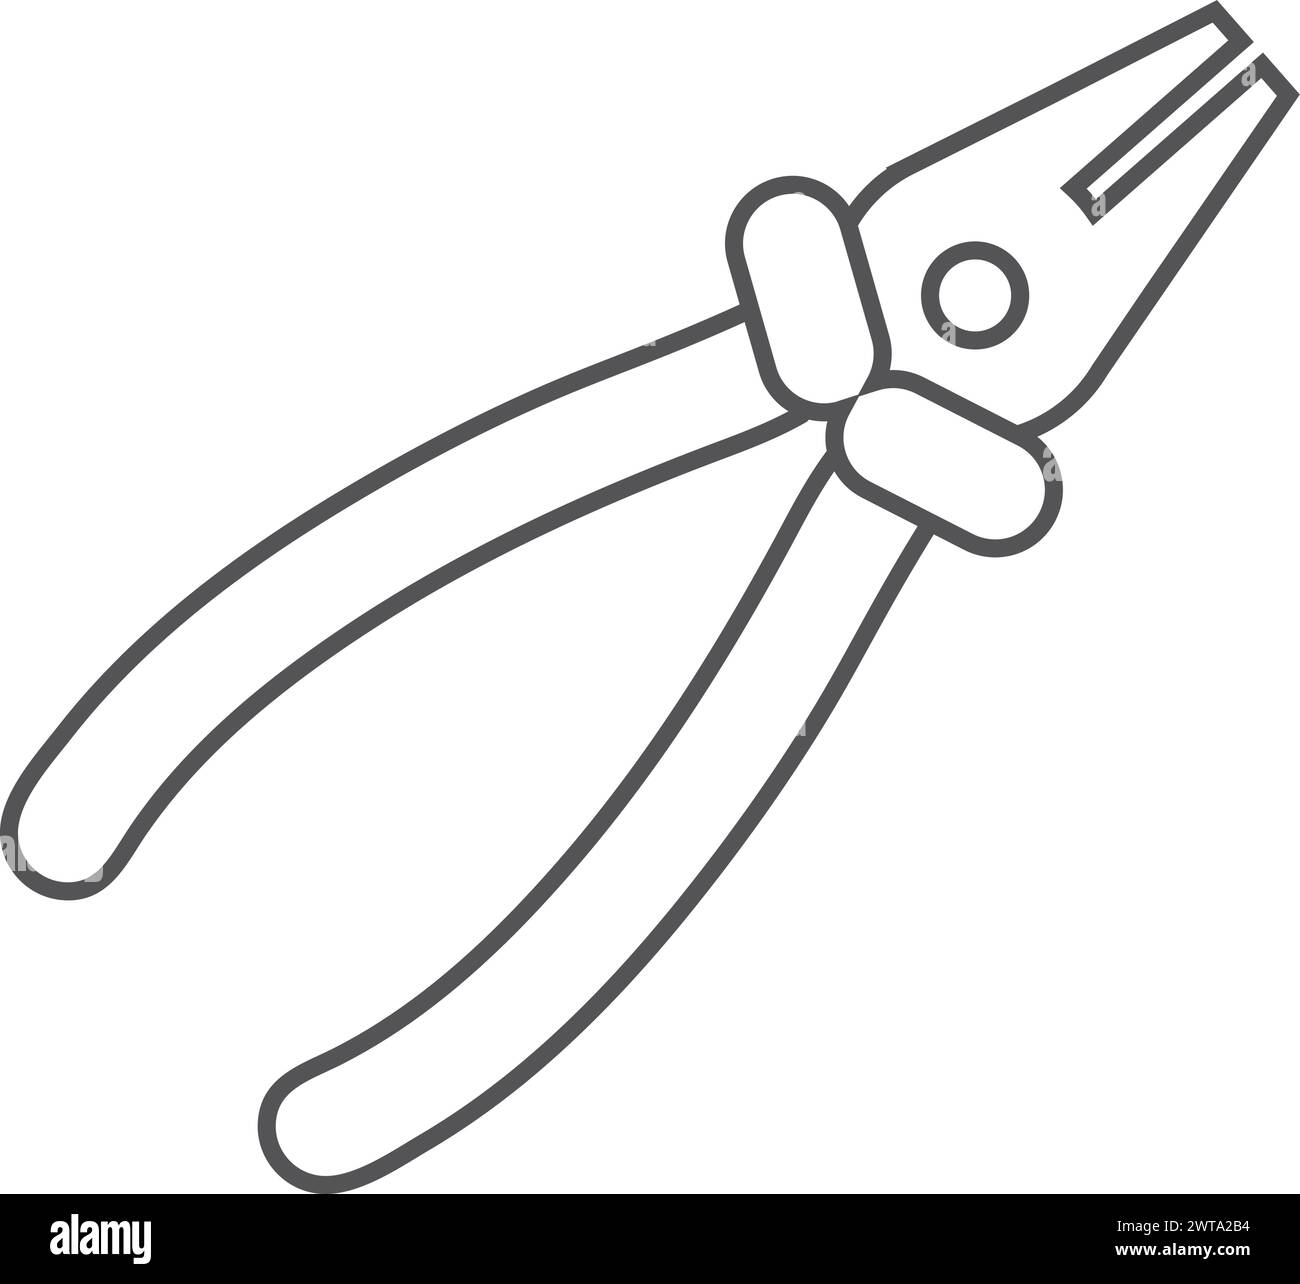 Pliers icon. Handyman electric repair tool symbol Stock Vector